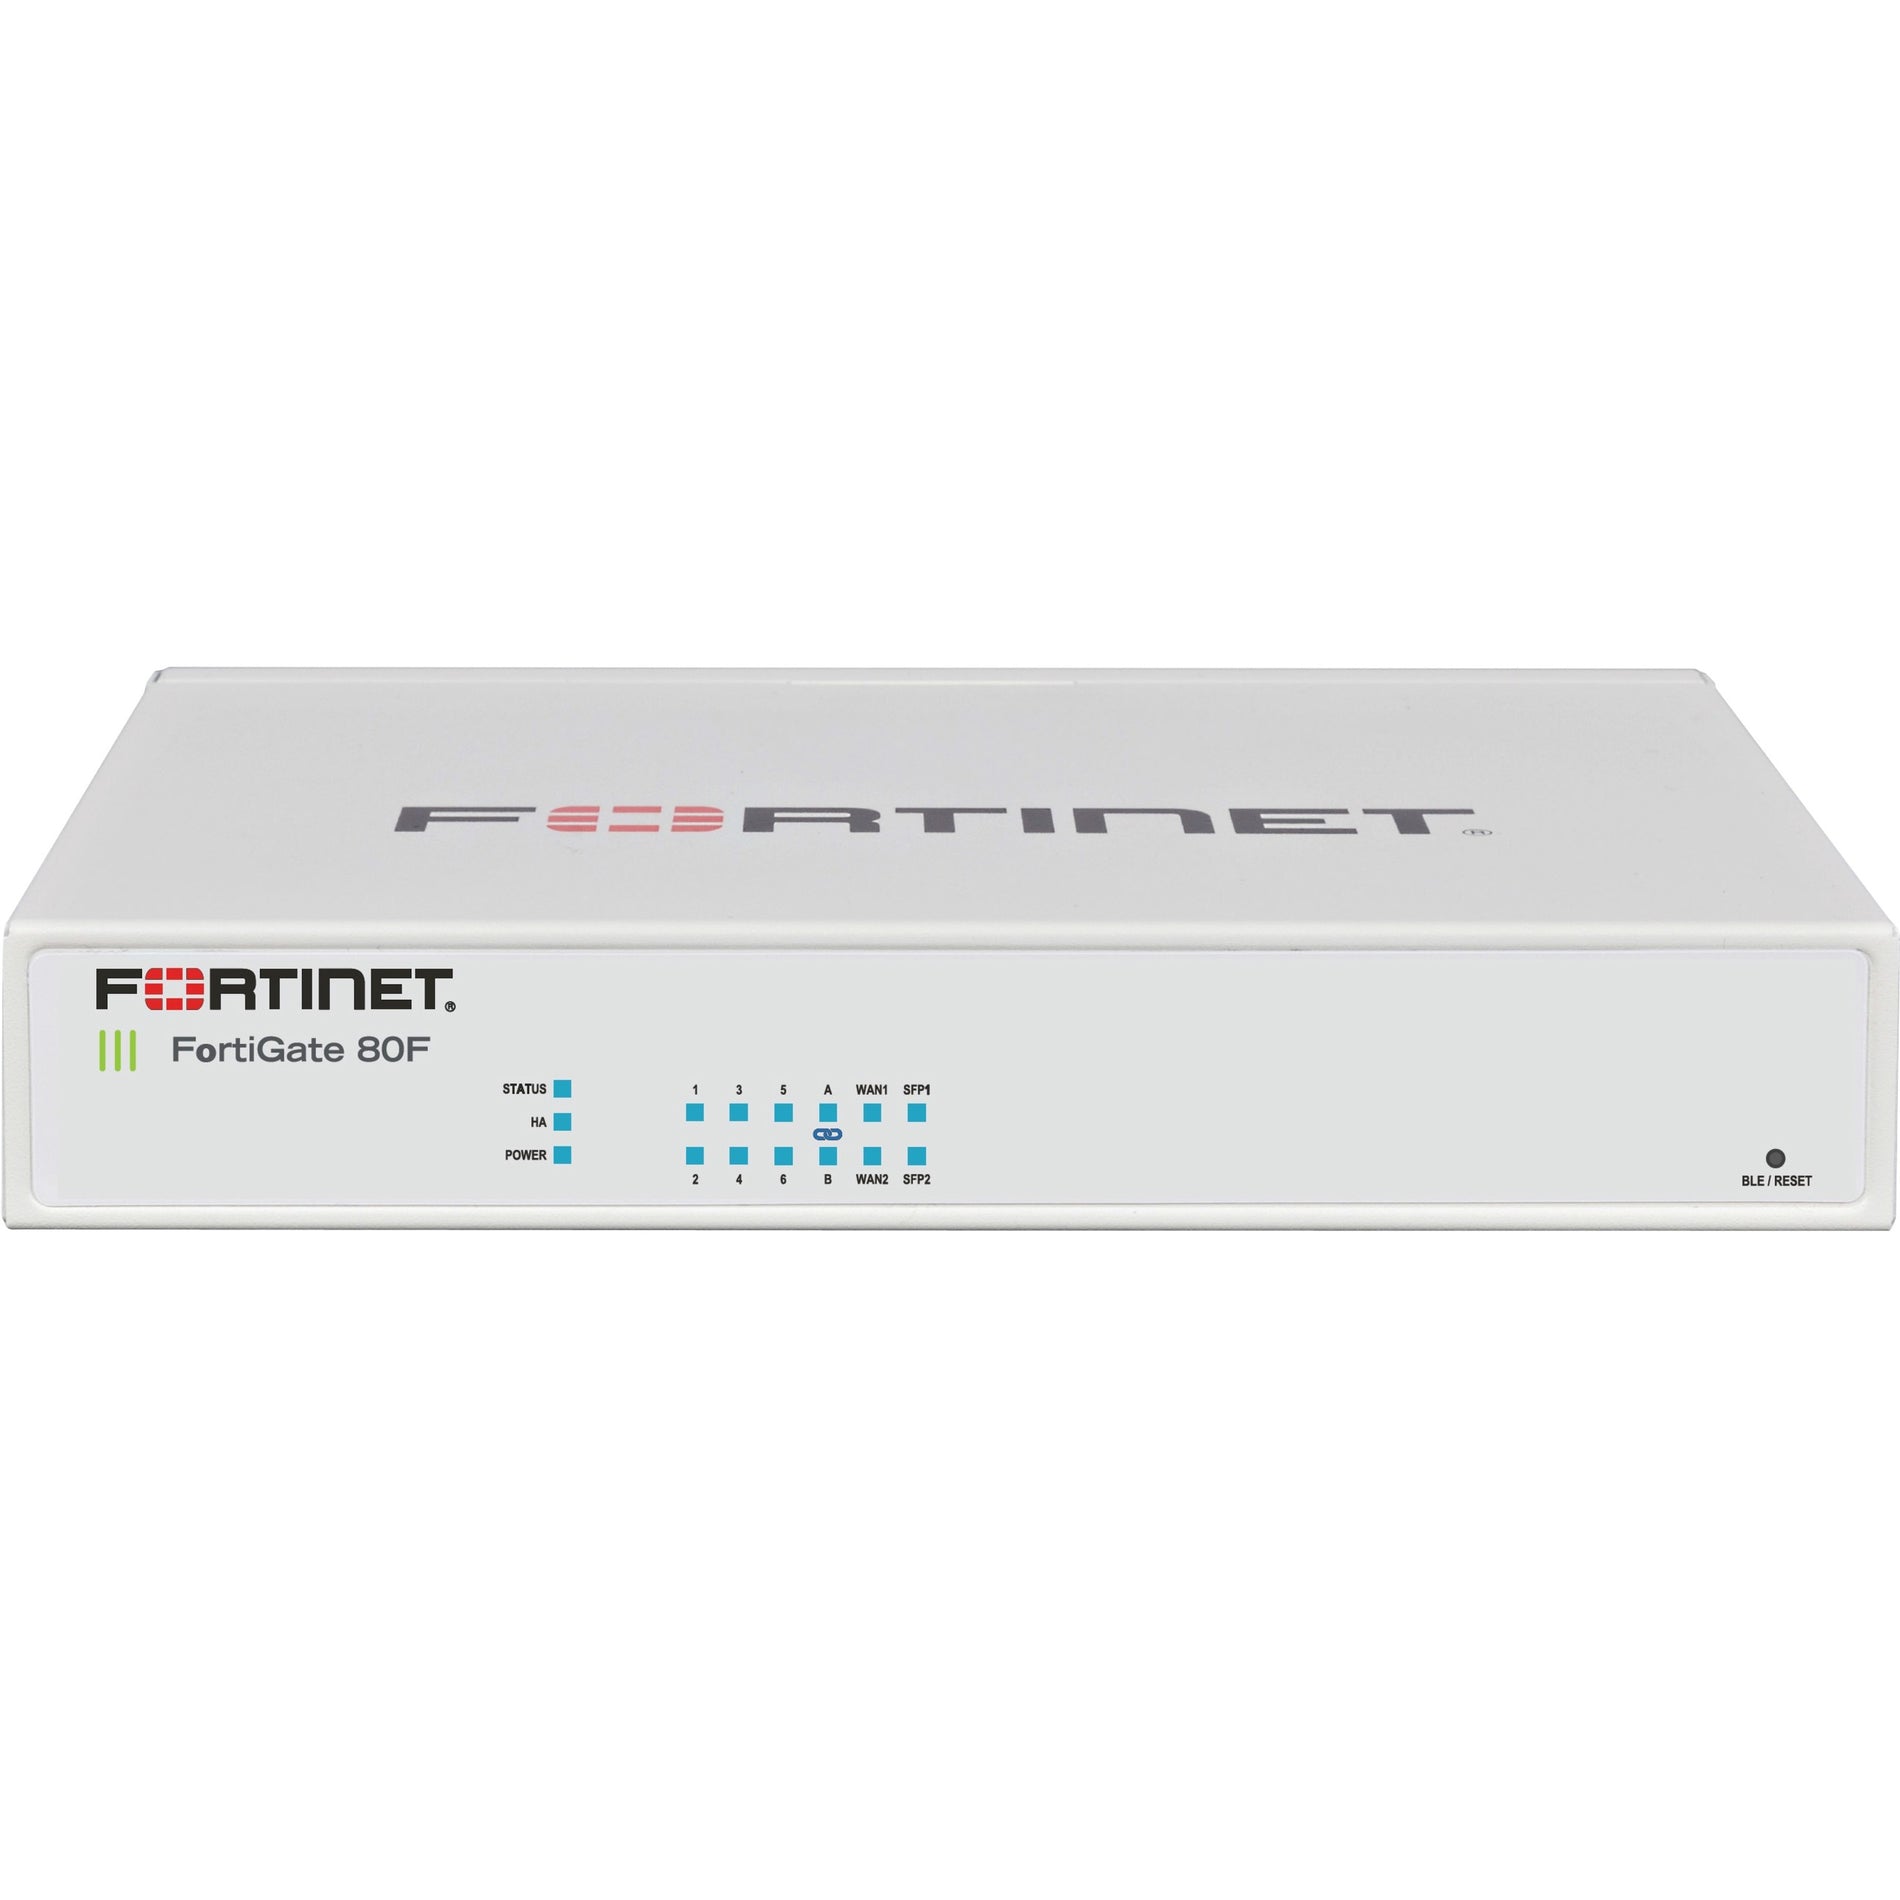 Fortinet FG-80F-POE-BDL-950-12 FortiGate 80F-PoE Network Security/Firewall Appliance, 8 PoE Ports, 2 SFP Slots